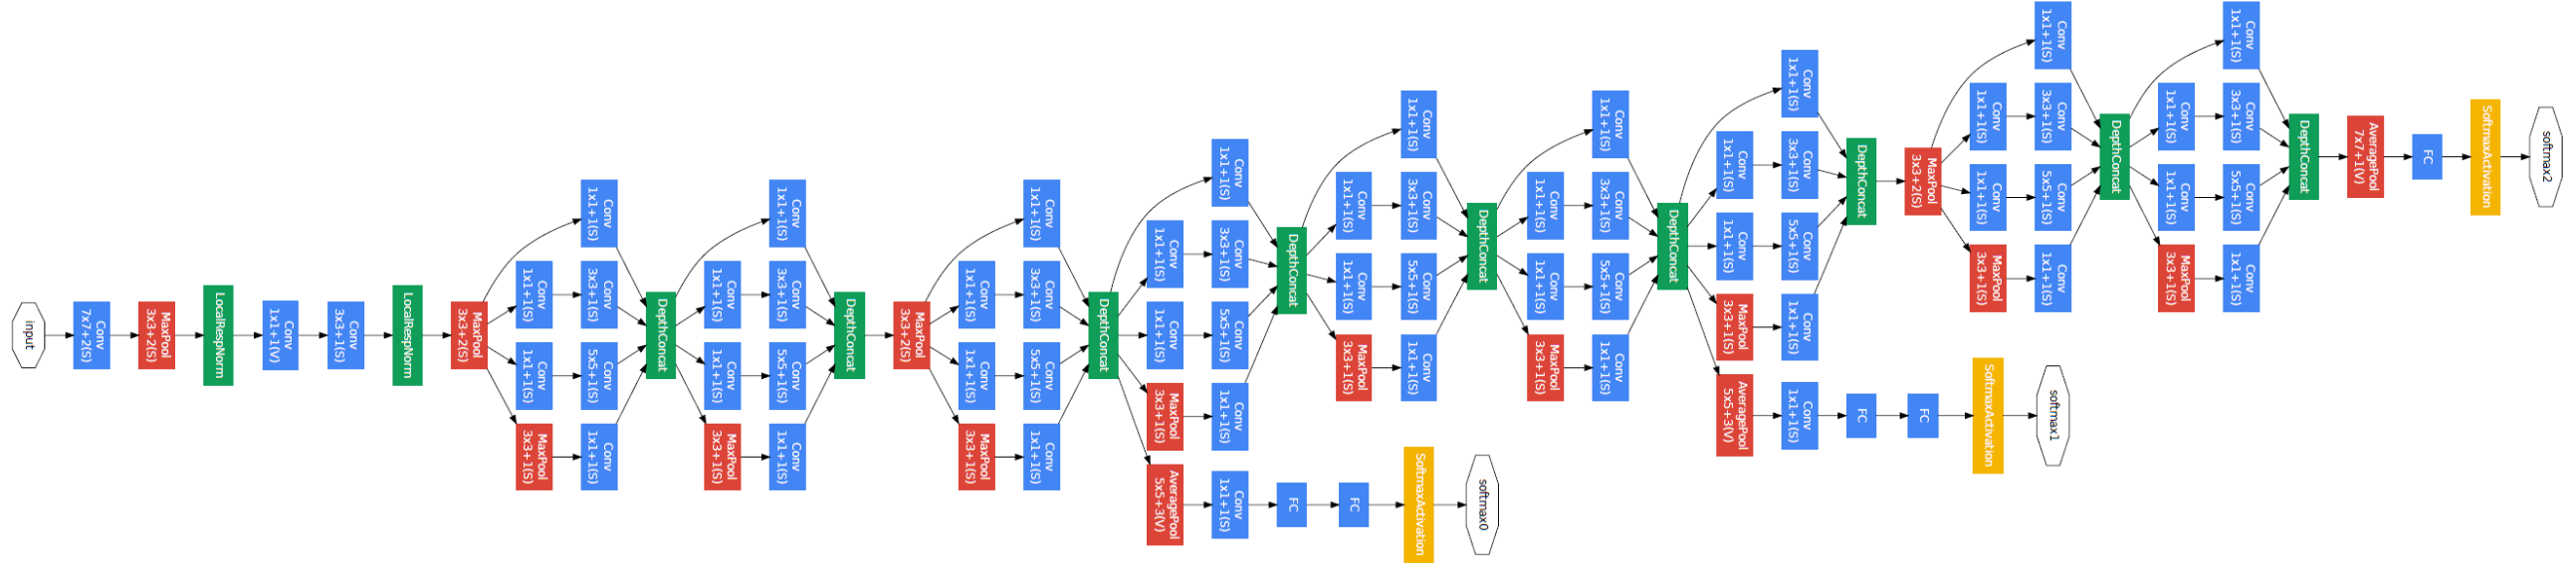 GoogleNet architecture